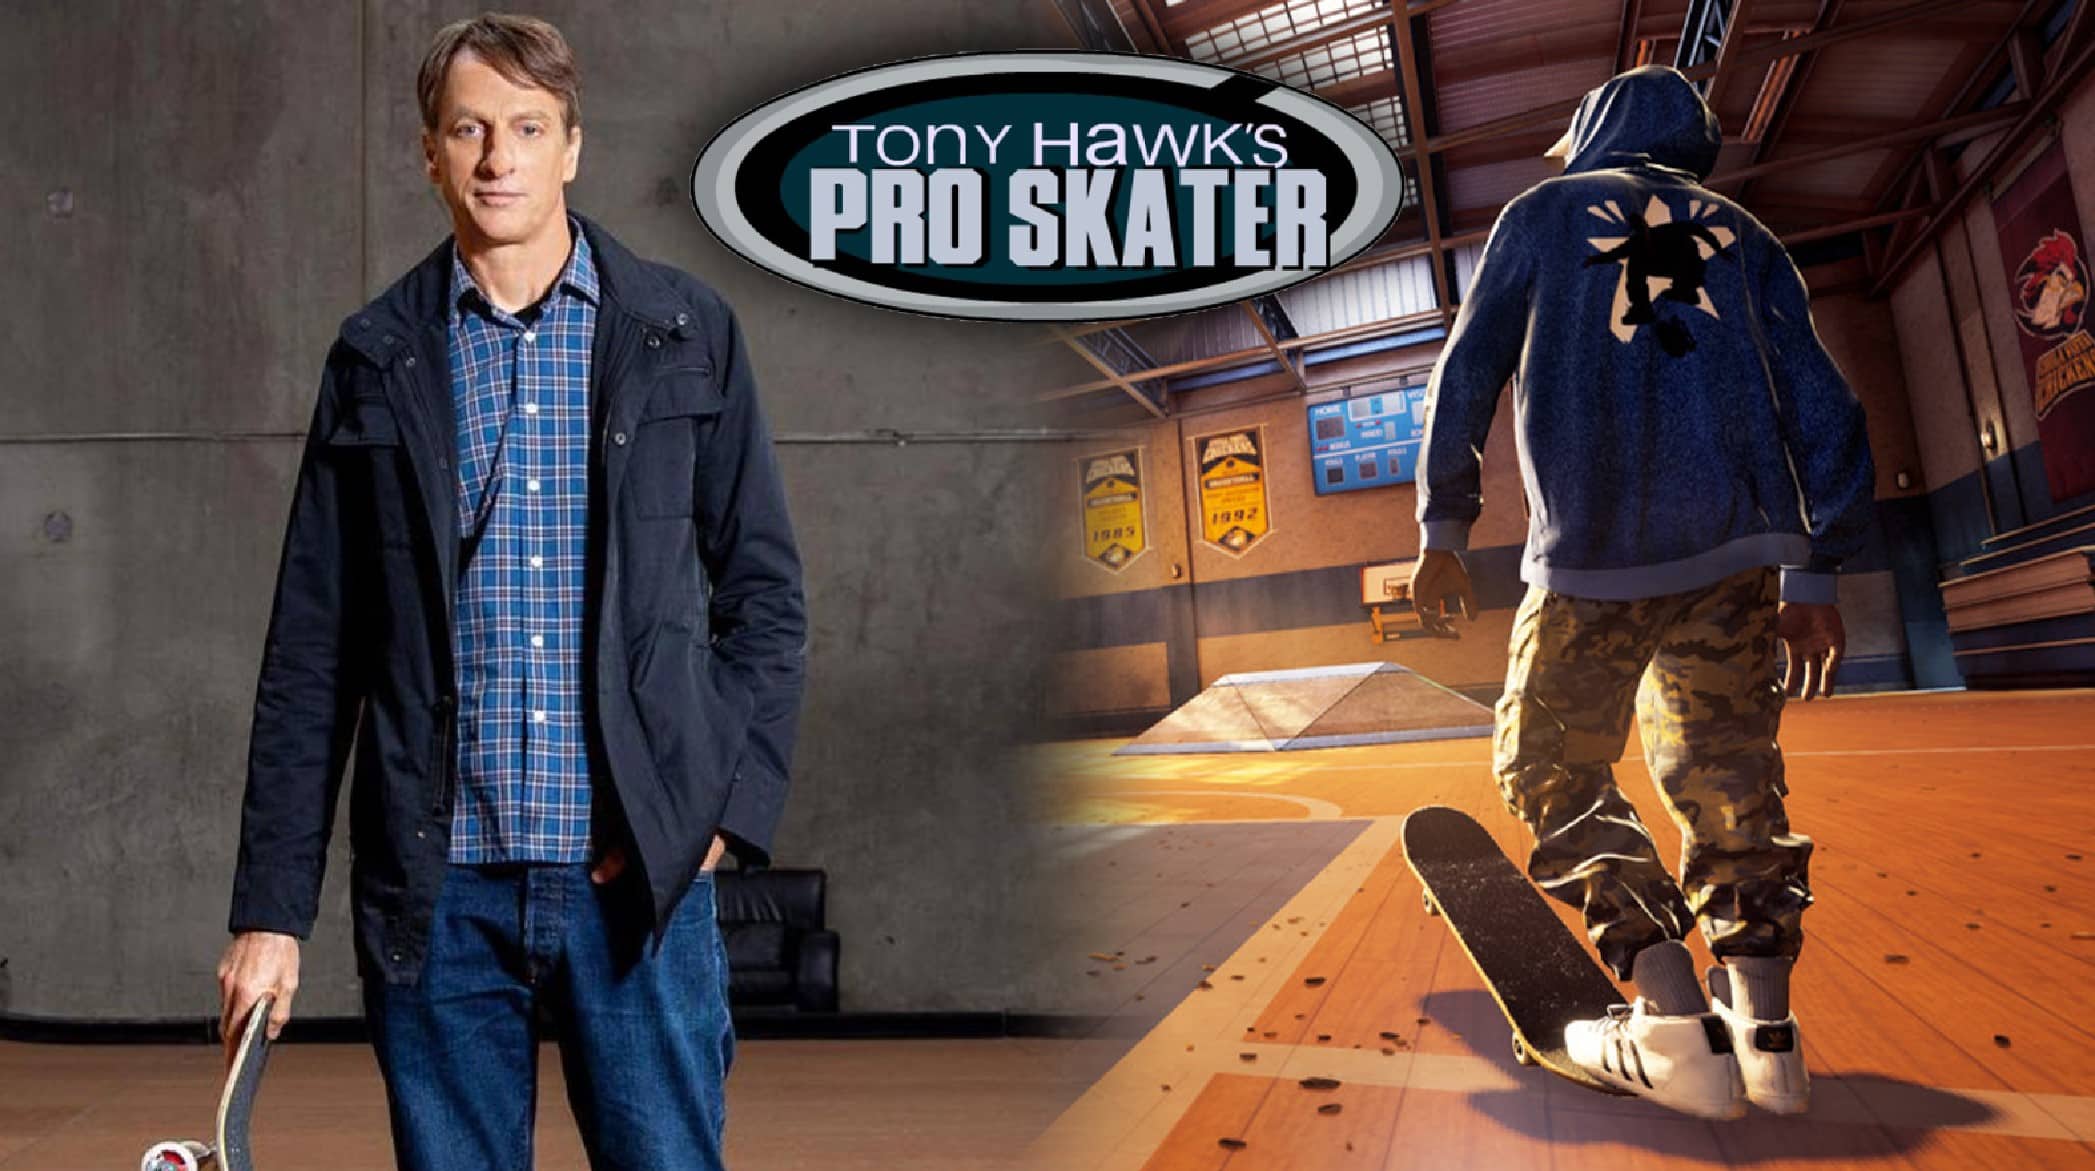 Tony Hawk next to Pro Skater gameplay